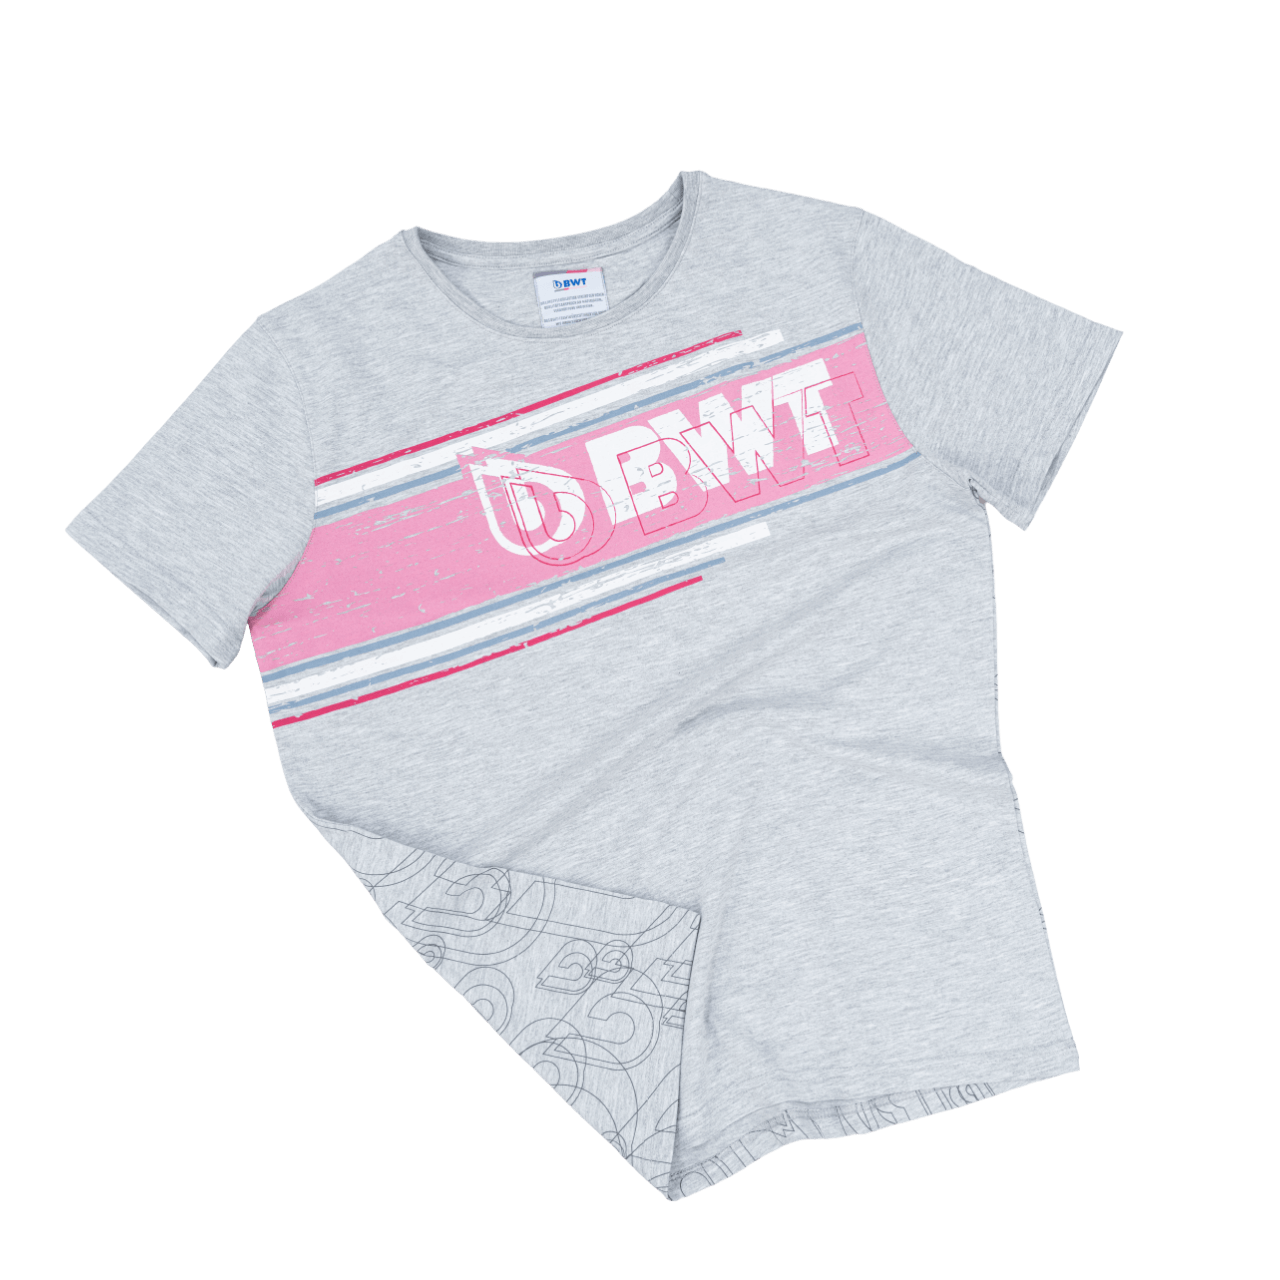 BWT Lifestyle Camiseta hombre gris con logo BWT blanco sobre fondo rosa